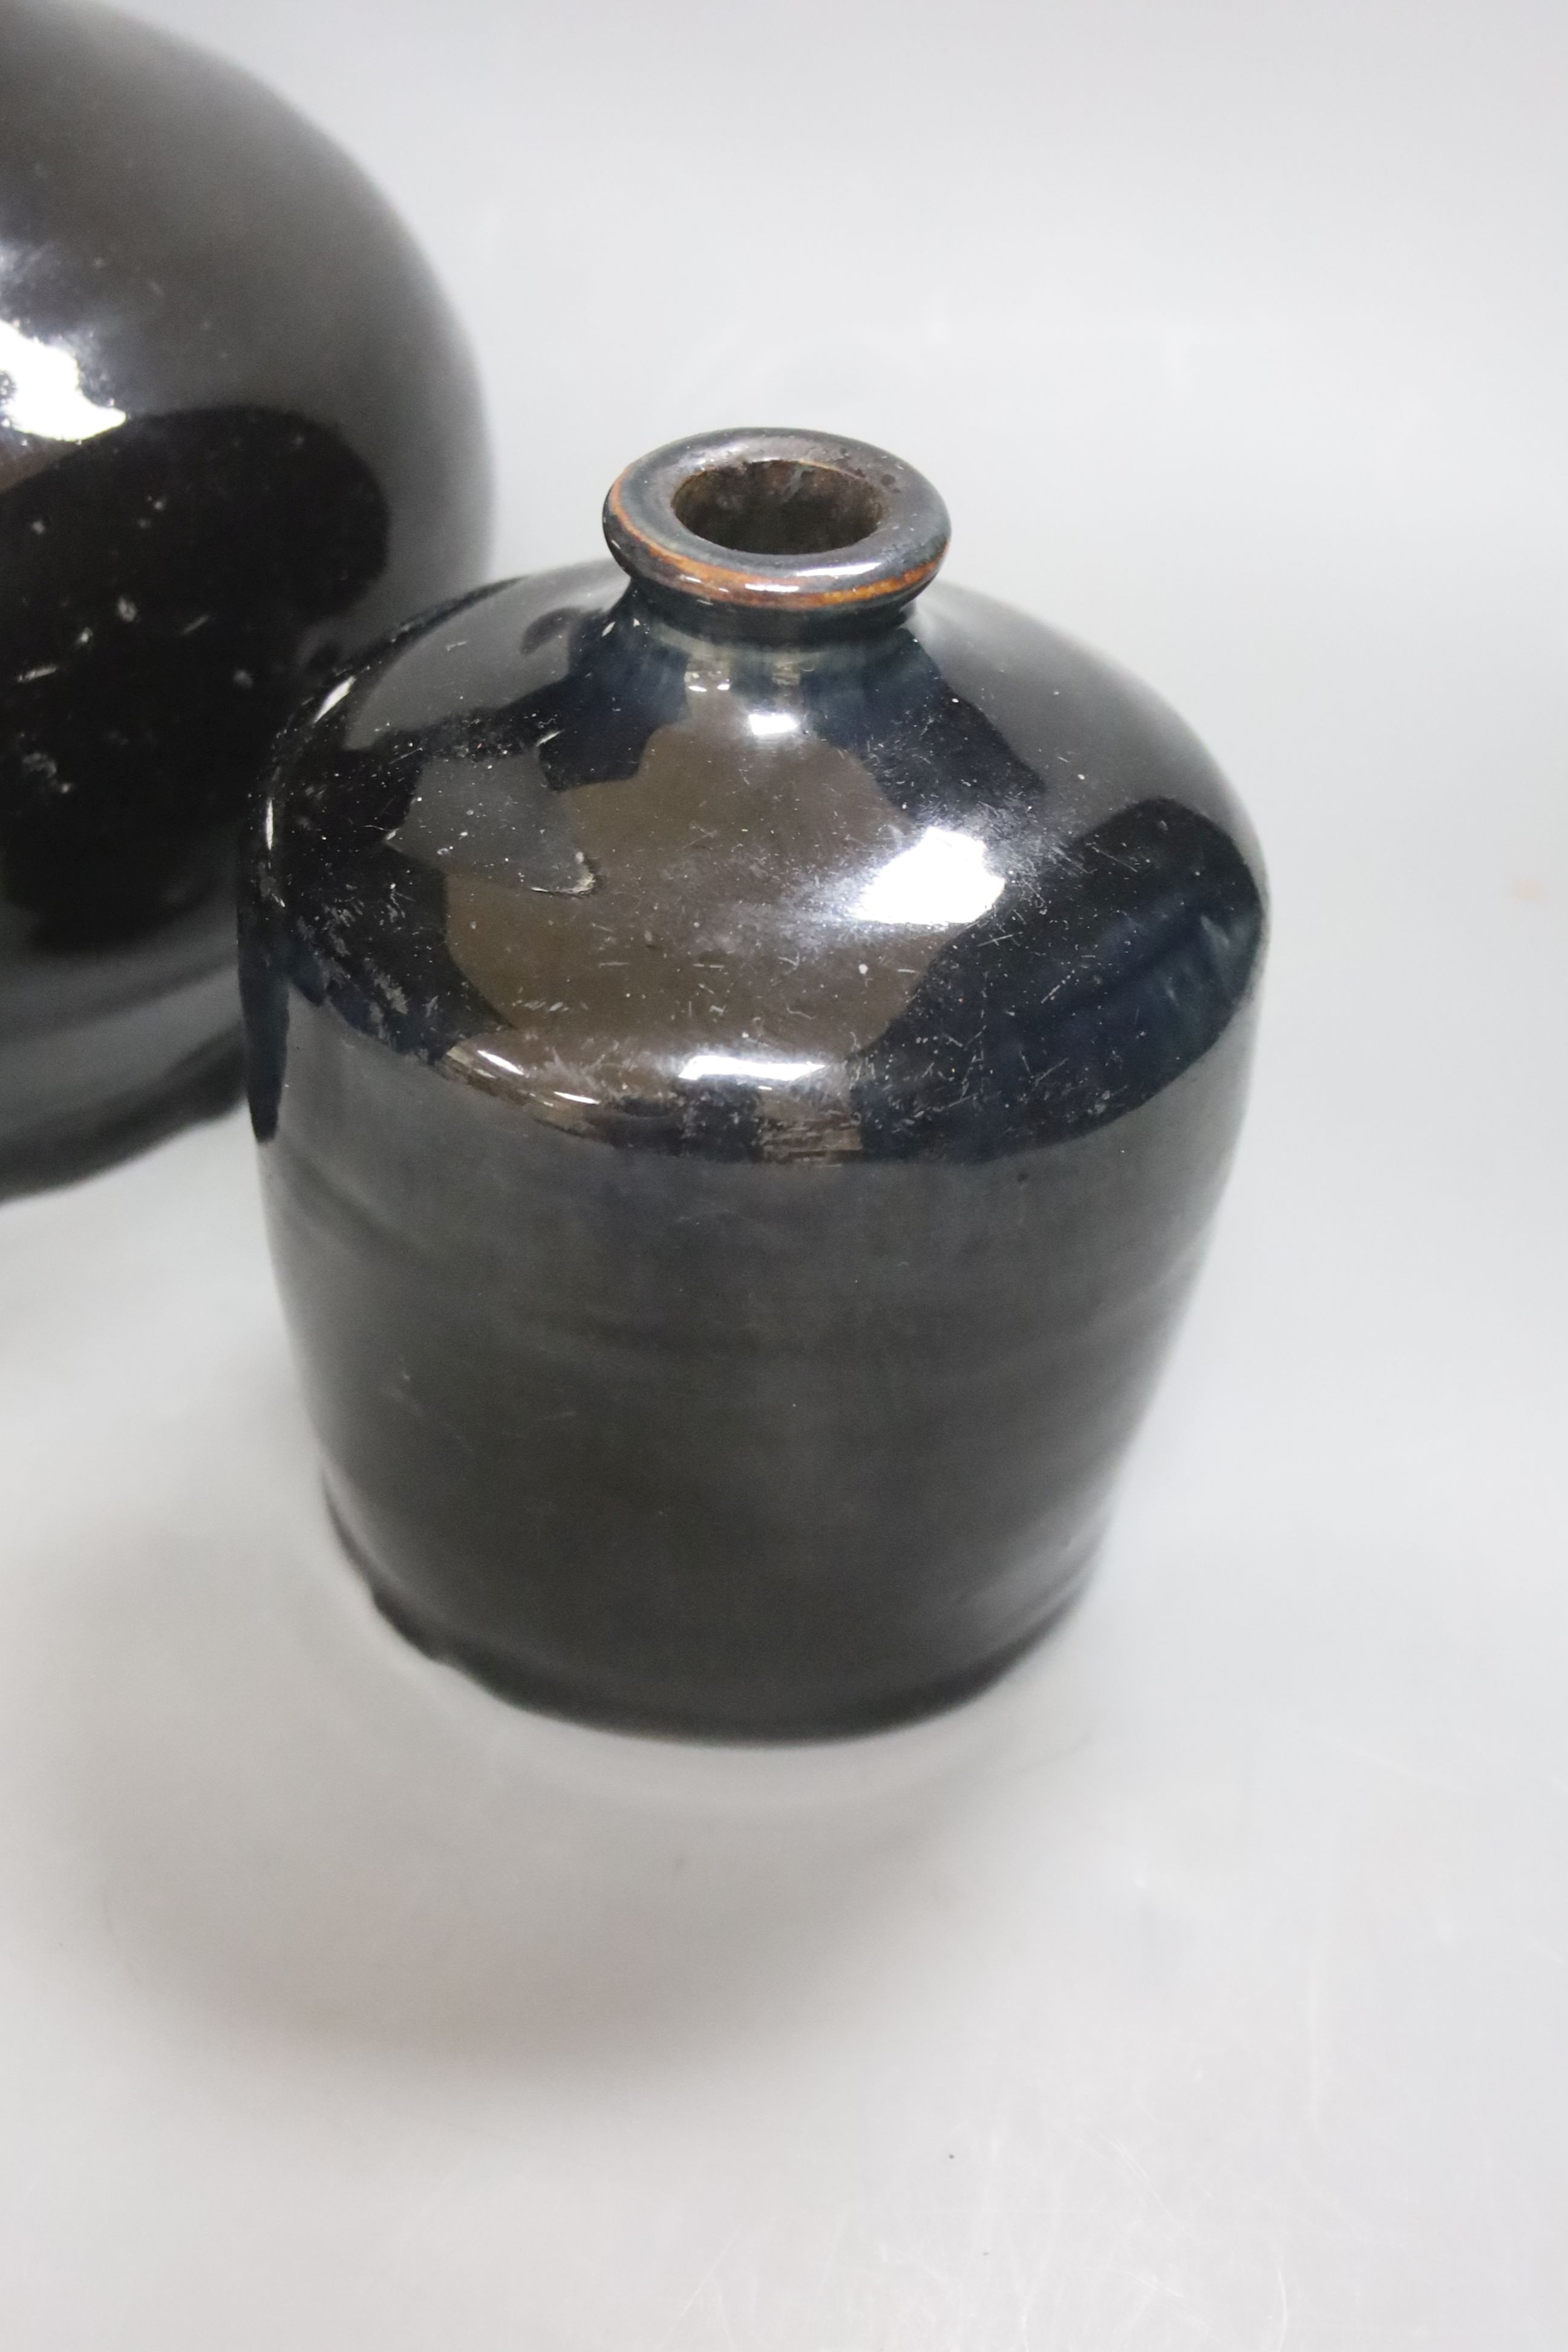 Three Chinese Shanxi black glazed jars, Qing dynasty, height 12 - 20cm